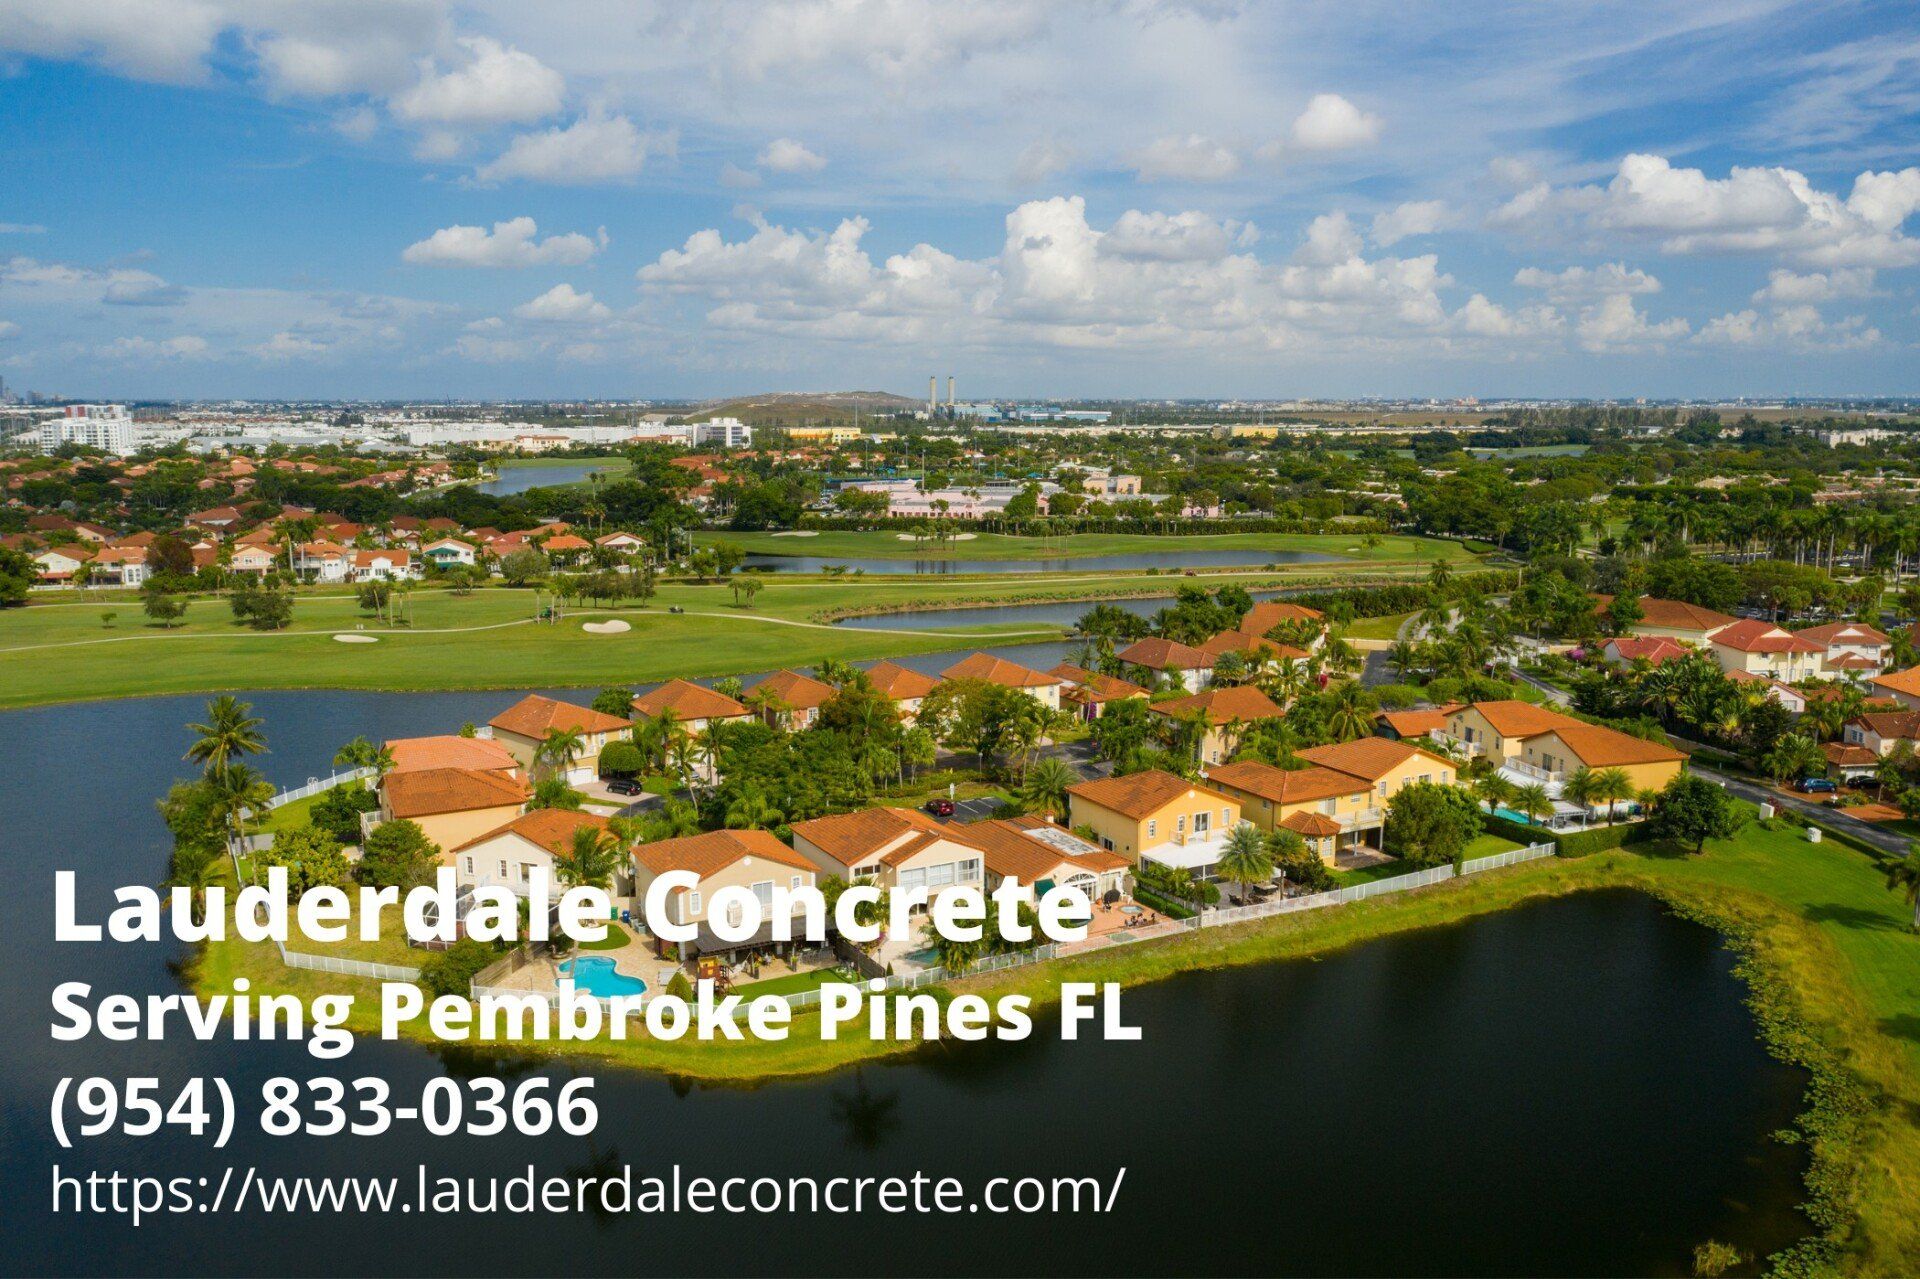 aerial view of the homes in Pembroke Pines FL. Text by Lauderdale Concrete - a concrete company serving Pembroke Pines FL